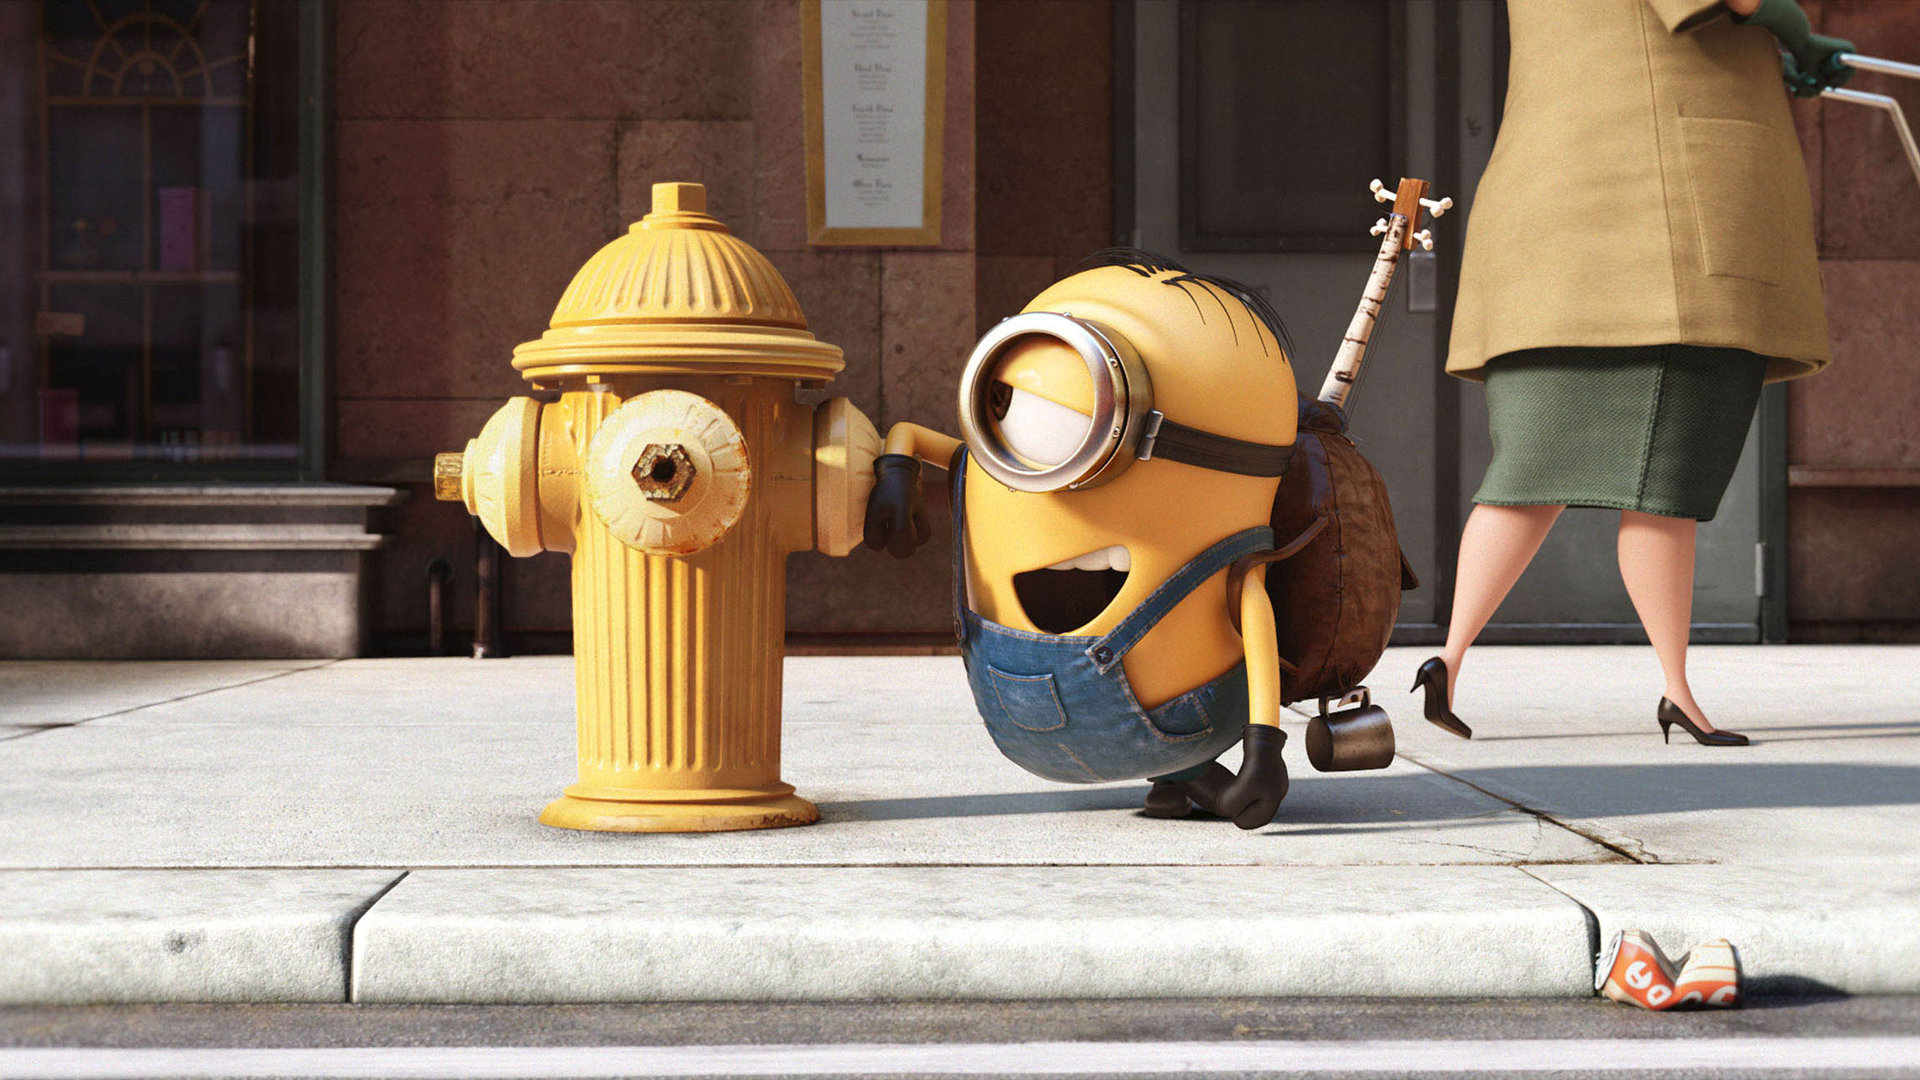 minions wallpaper hd,fire hydrant,yellow,animation,animated cartoon